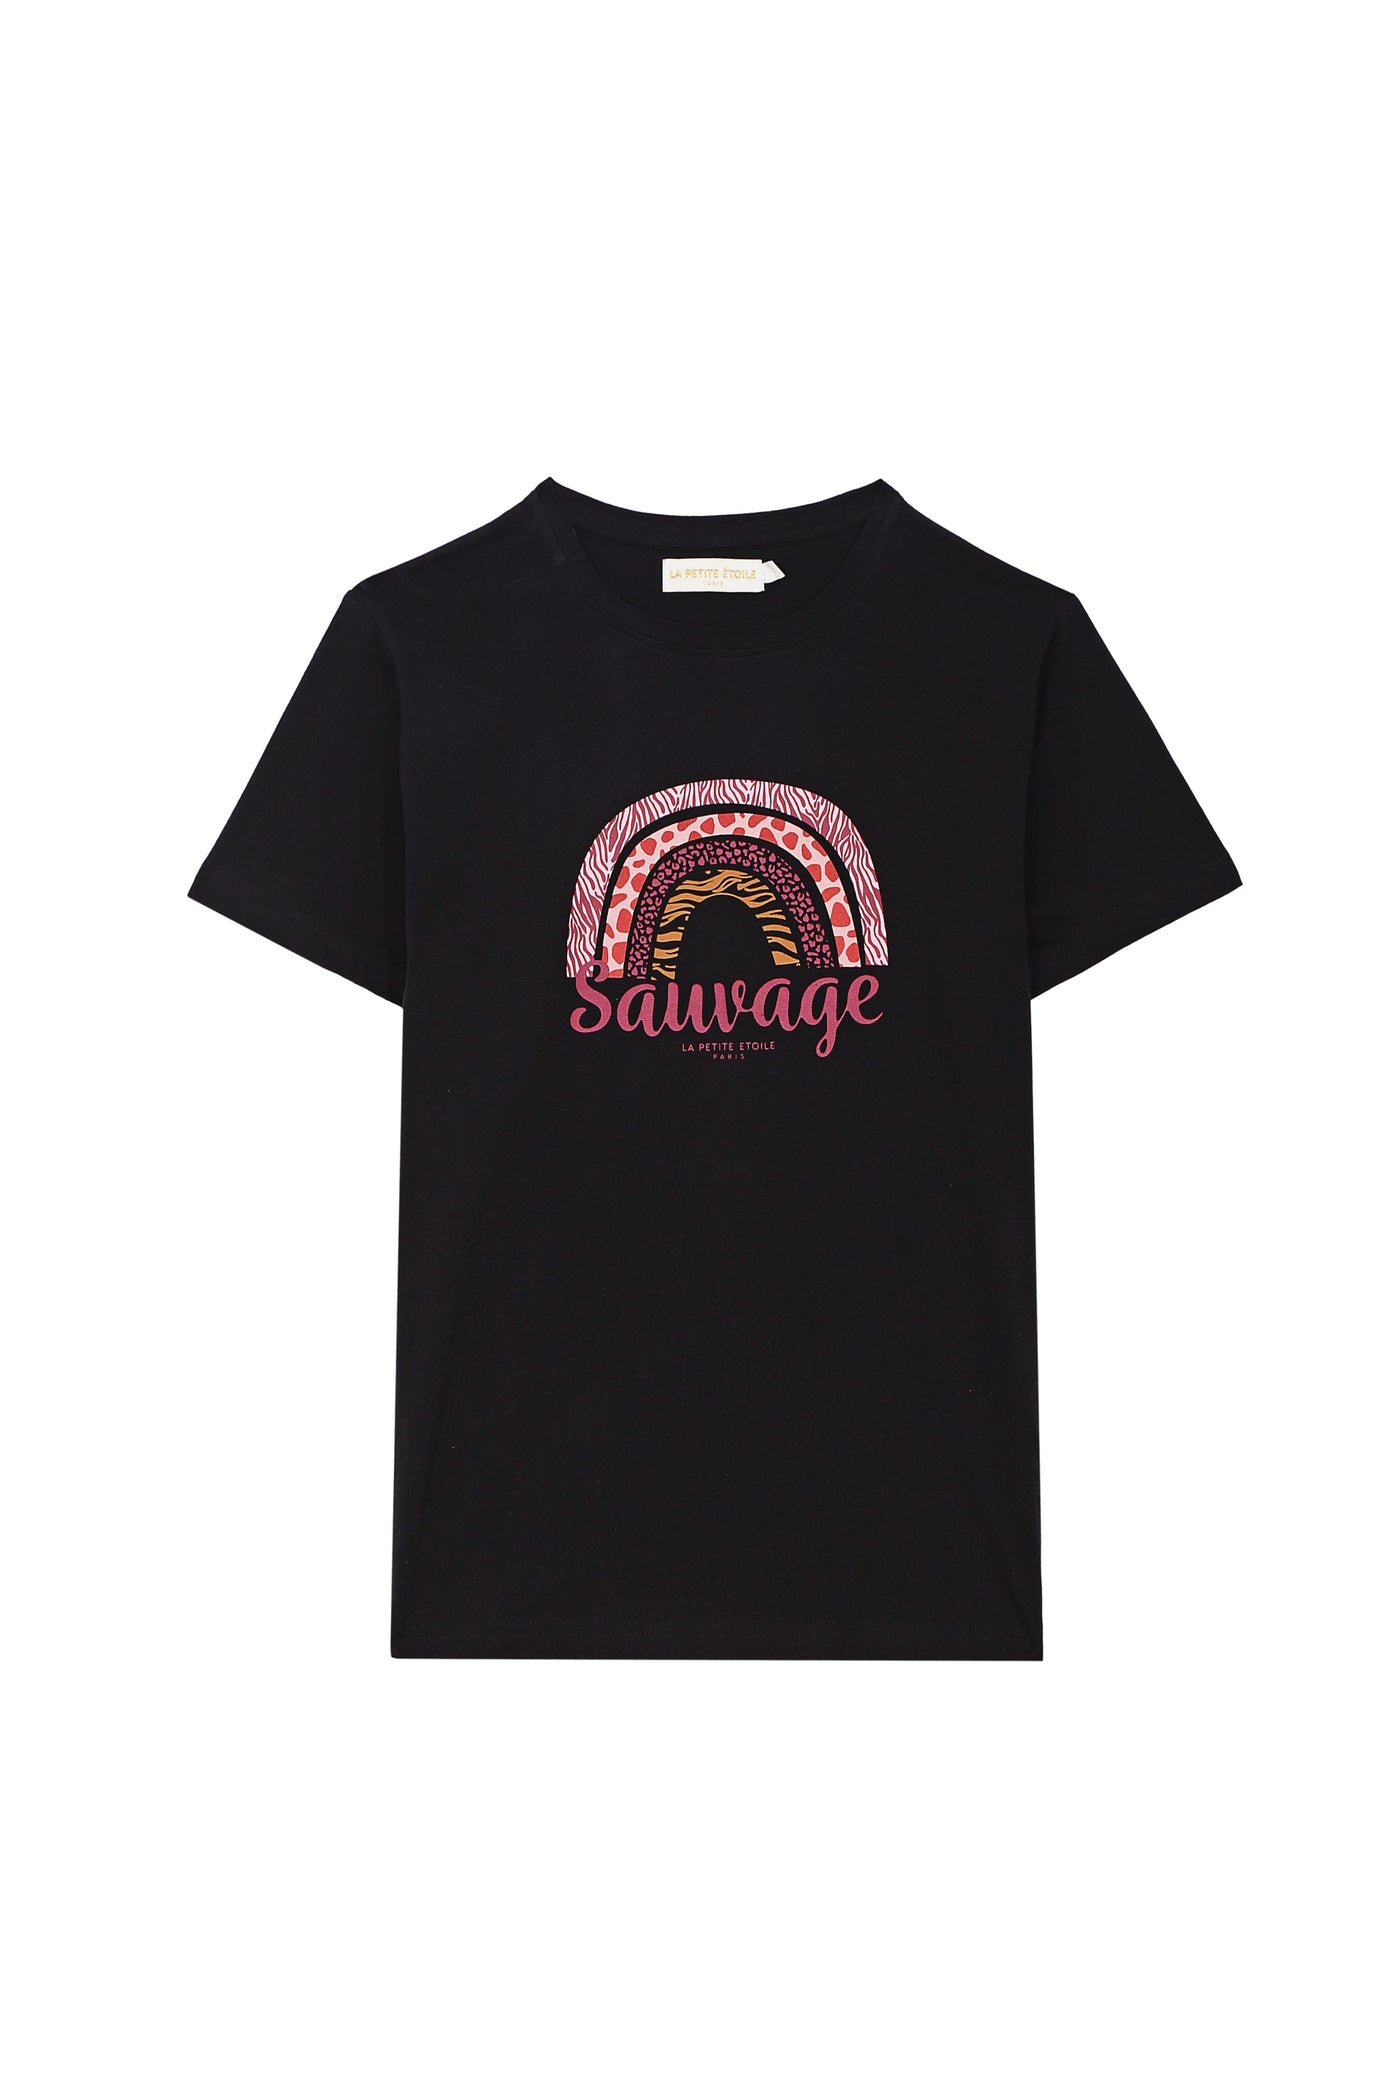 T-shirt Tauvage - Noir